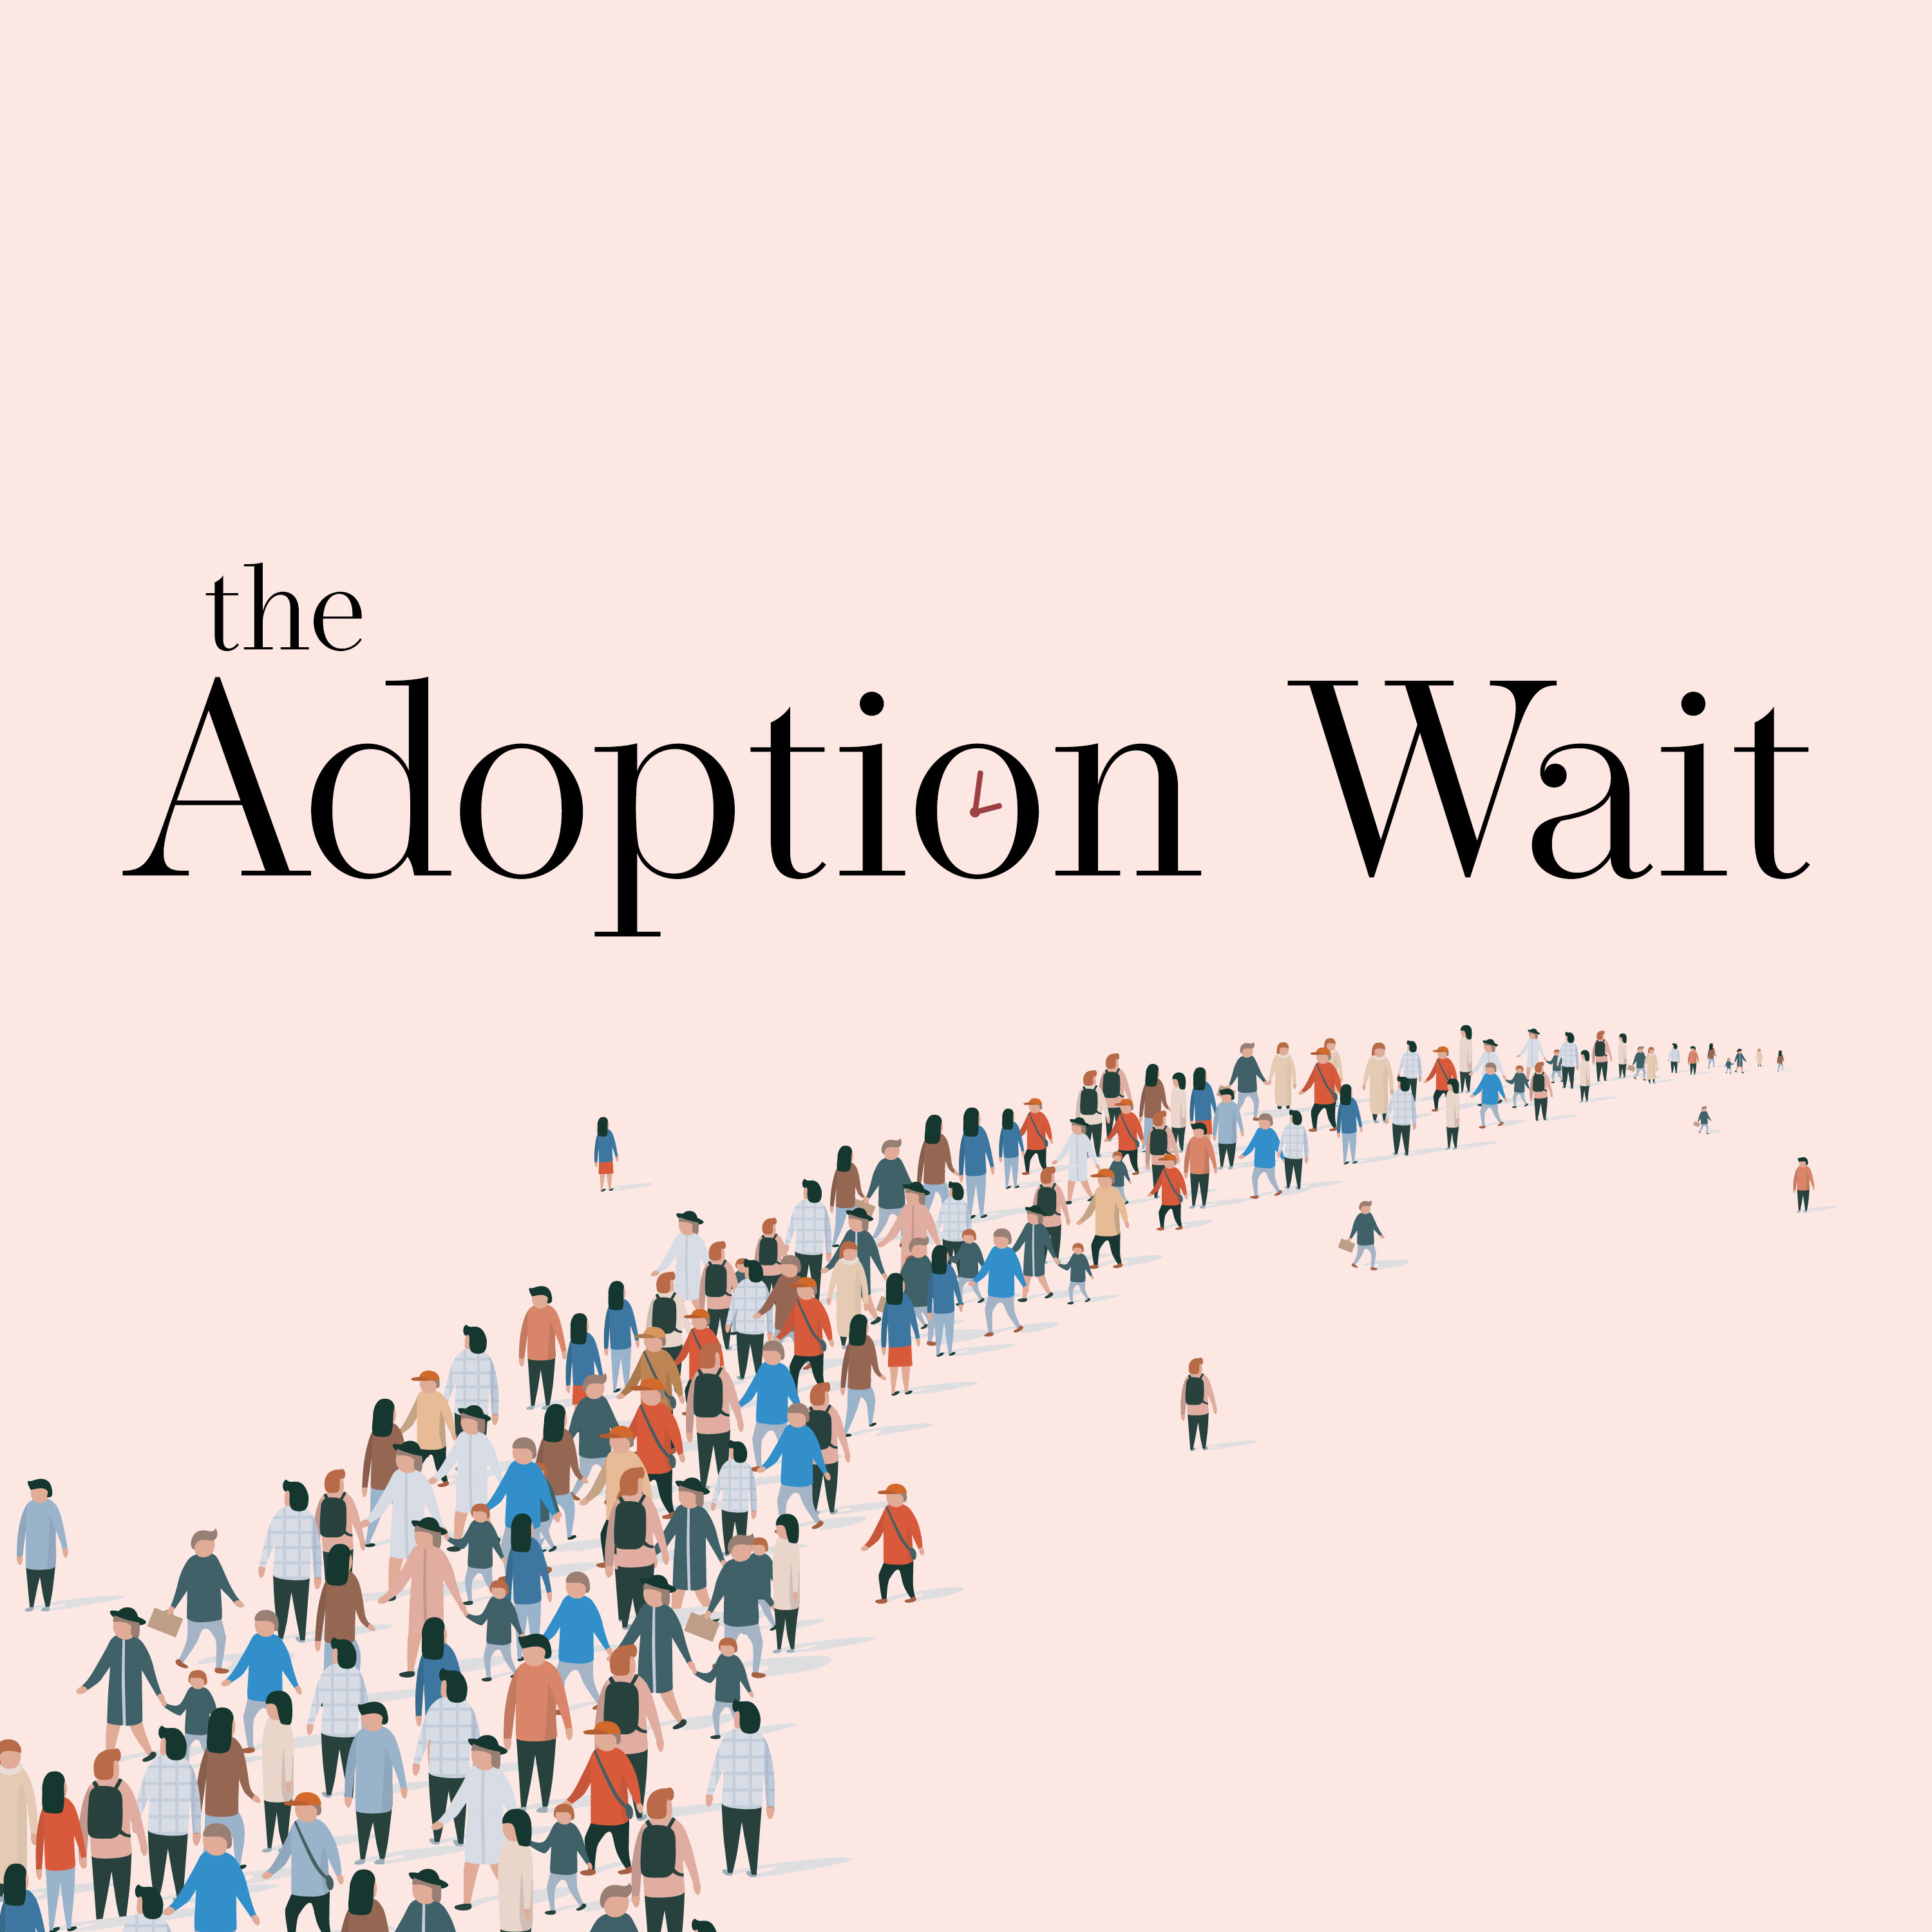 https://s3-us-west-2.amazonaws.com/cdn.adopting.com/site/the-adoption-wait-podcast.jpg